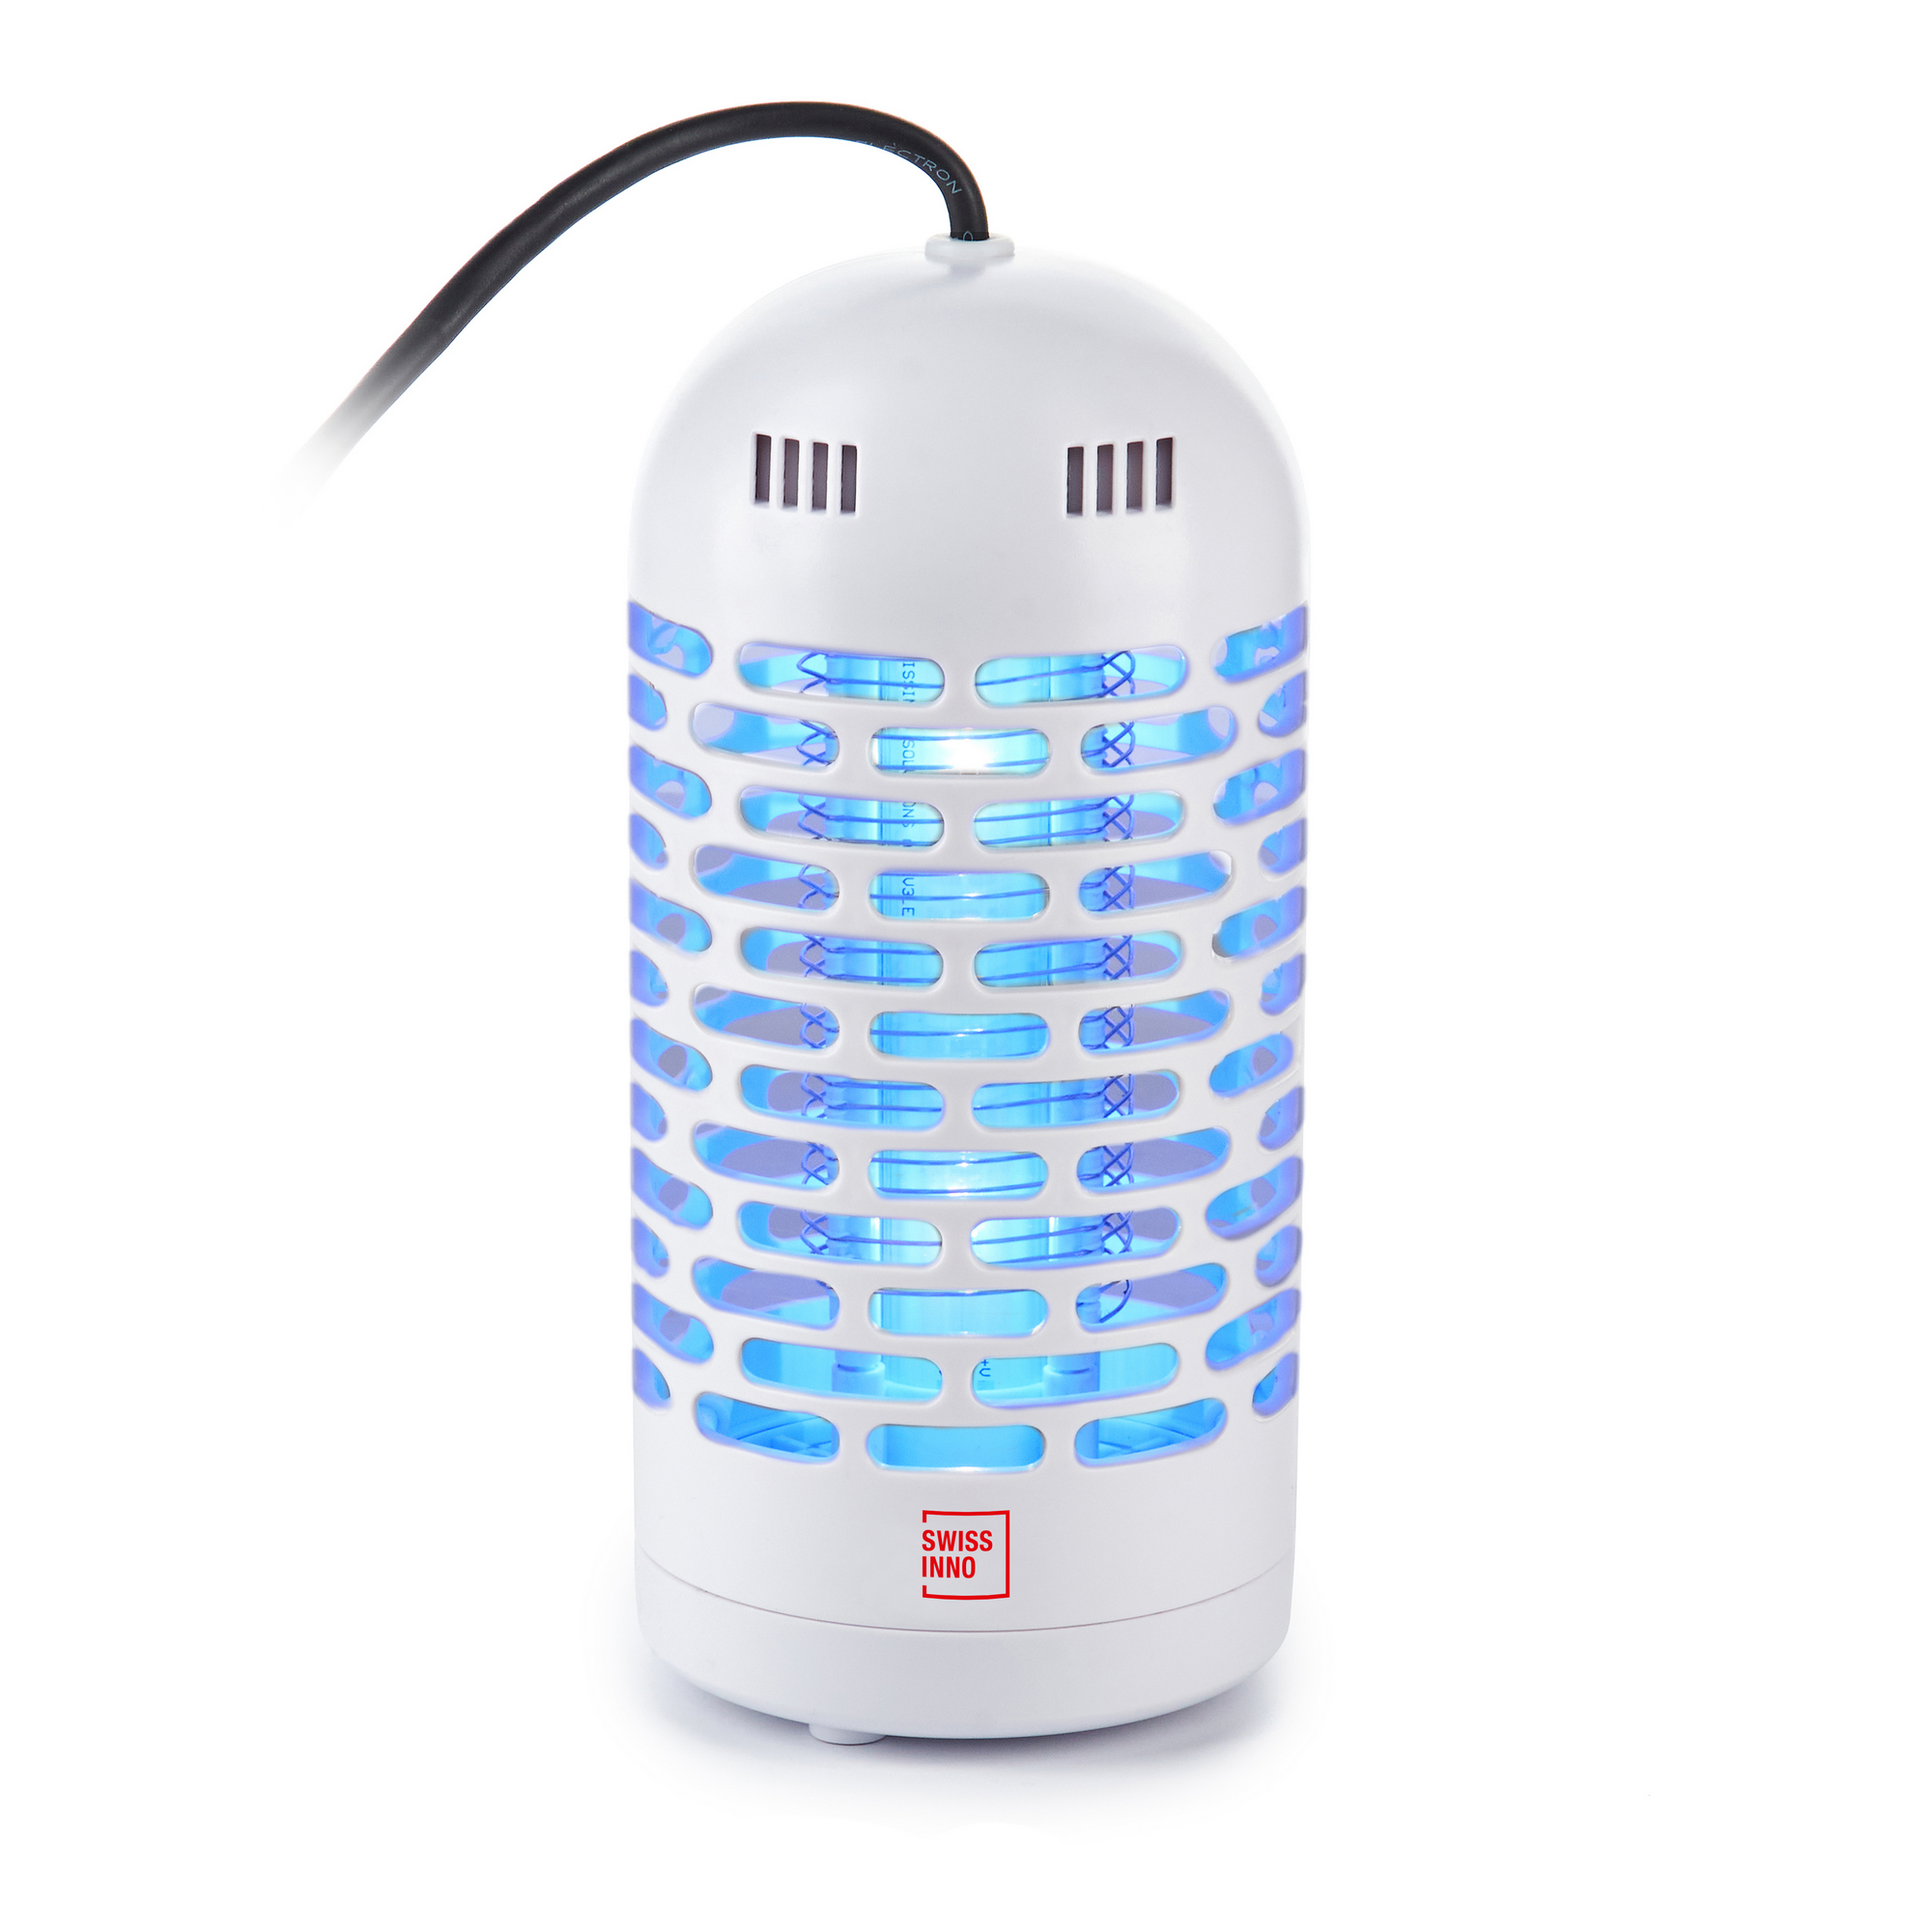 LED-Insektenvernichter 'Premium' 3 Watt + product picture